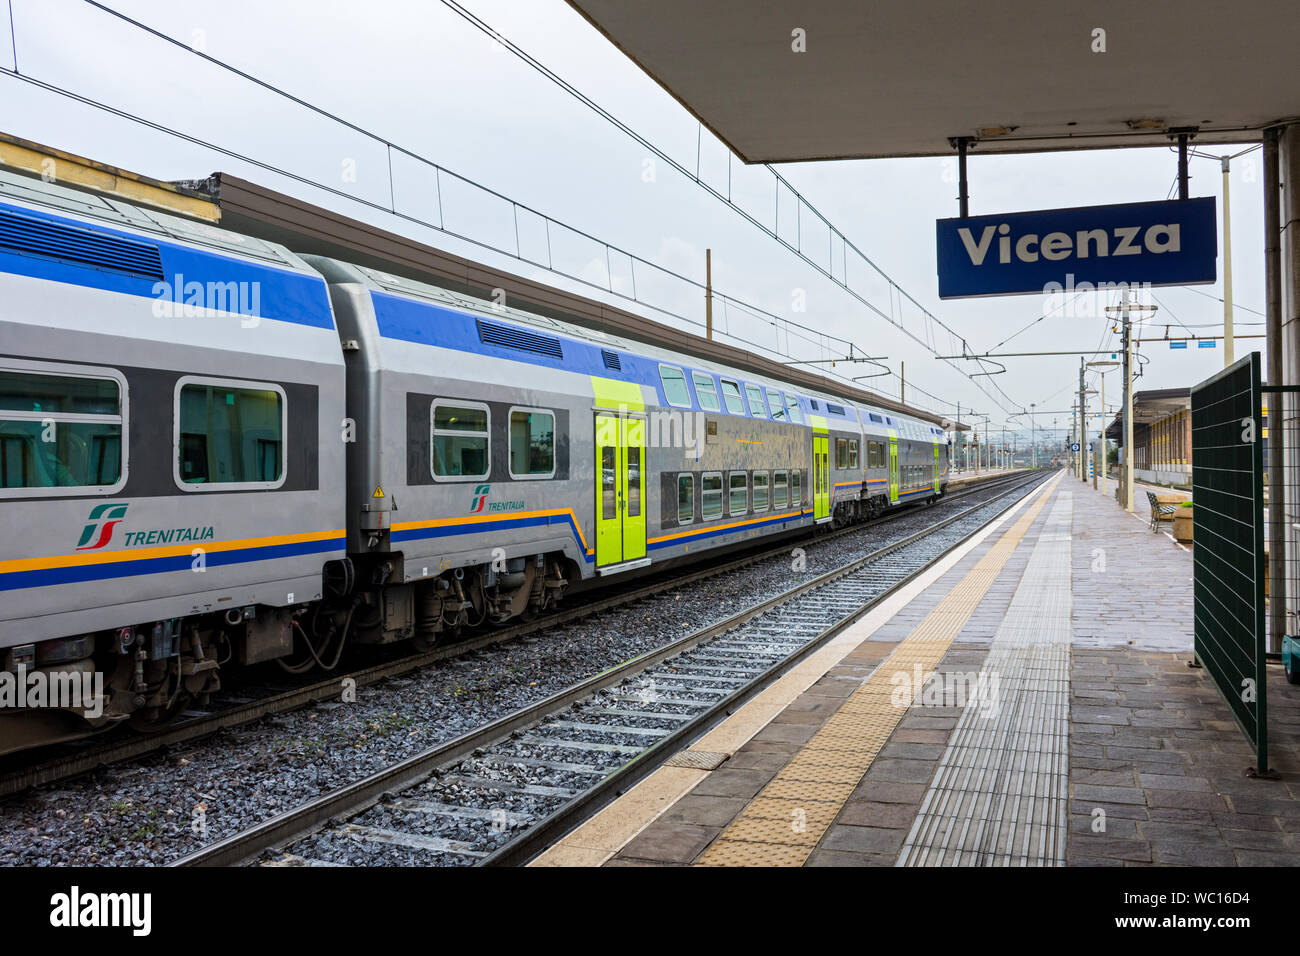 Der Bahnhof in Vicenza, Italien Stockfoto